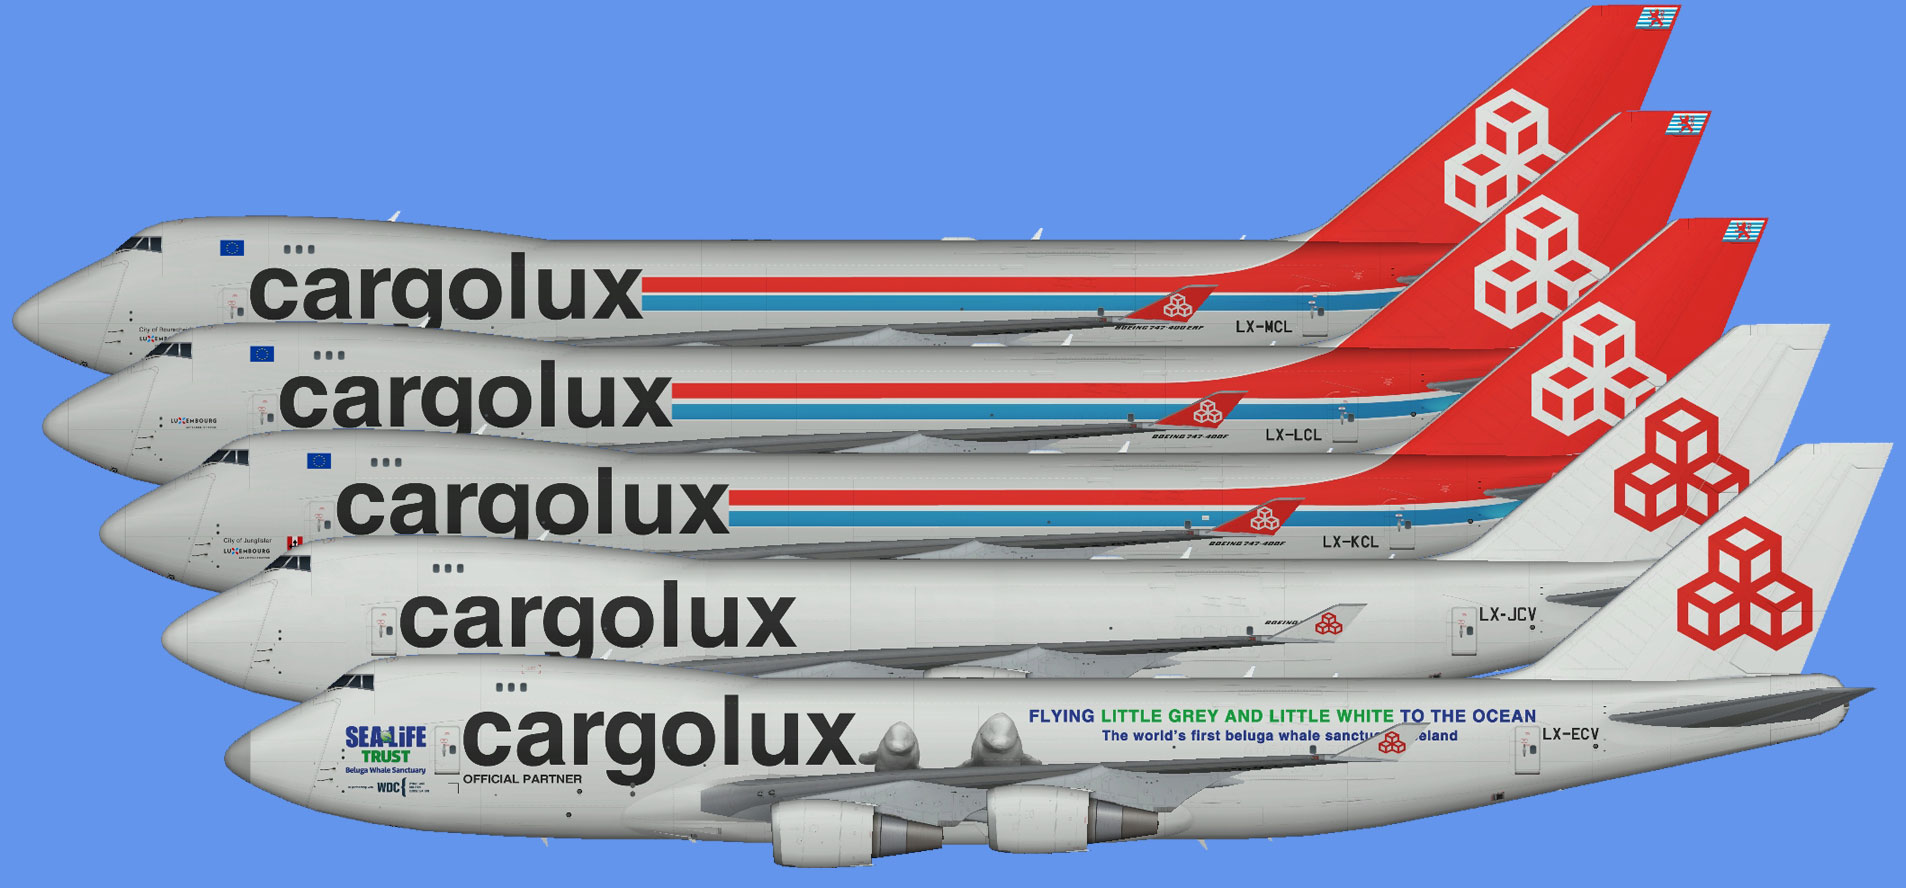 Cargolux Boeing 747-400F (GE)